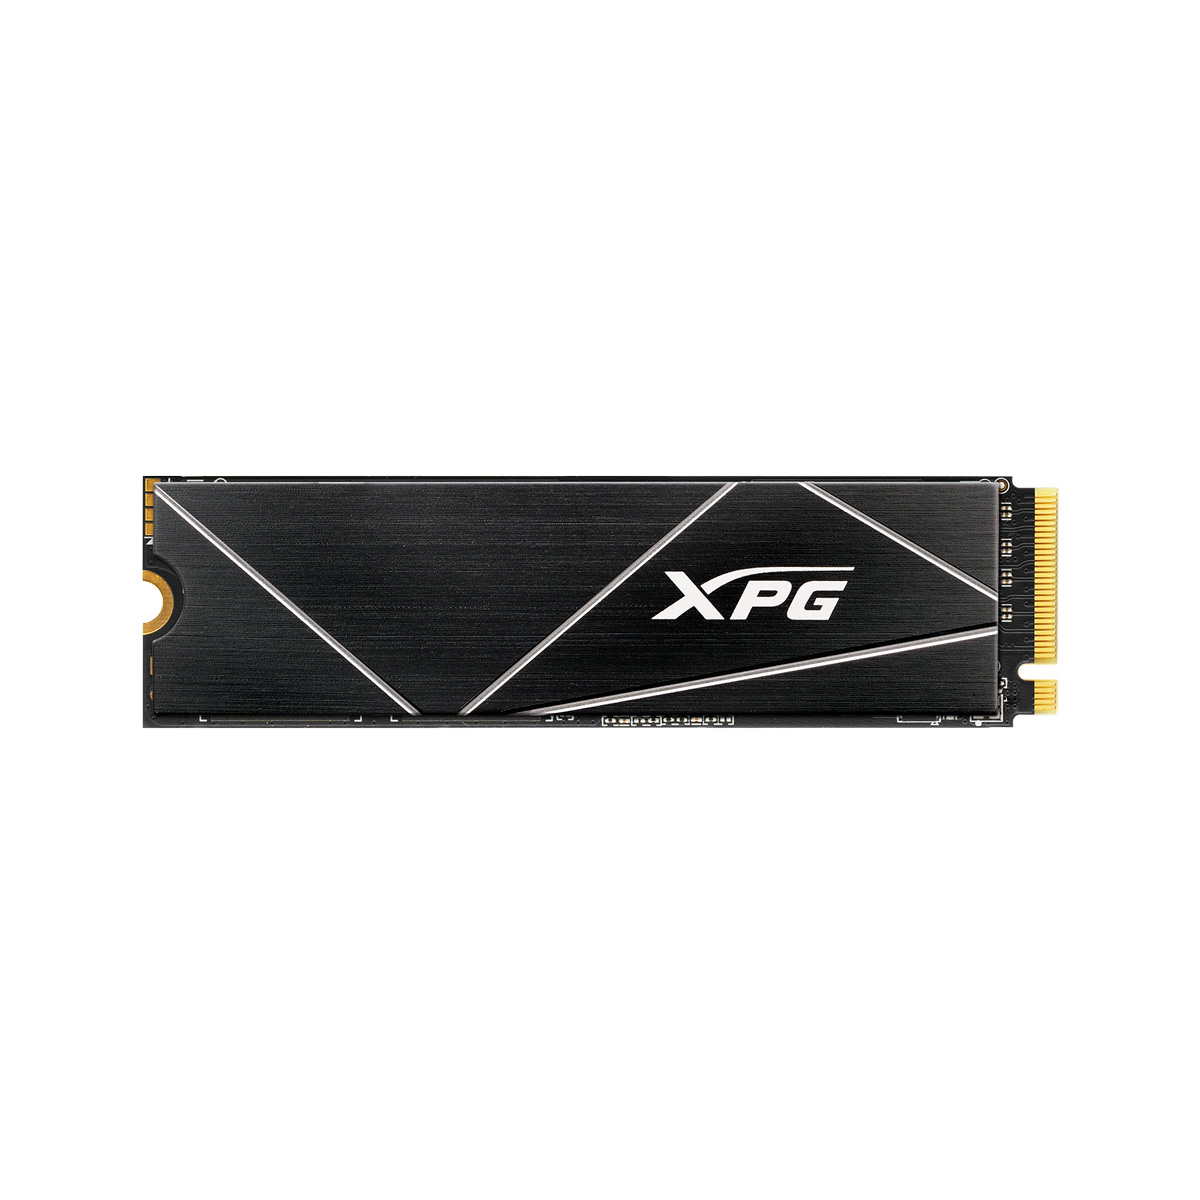 SSD M.2 512GB Adata XPG S70 Blade - NVMe - Leitura 7200MB/s - Gravação 2600MB/s - Compativel com PS5 - AGAMMIXS70B-512G-CS